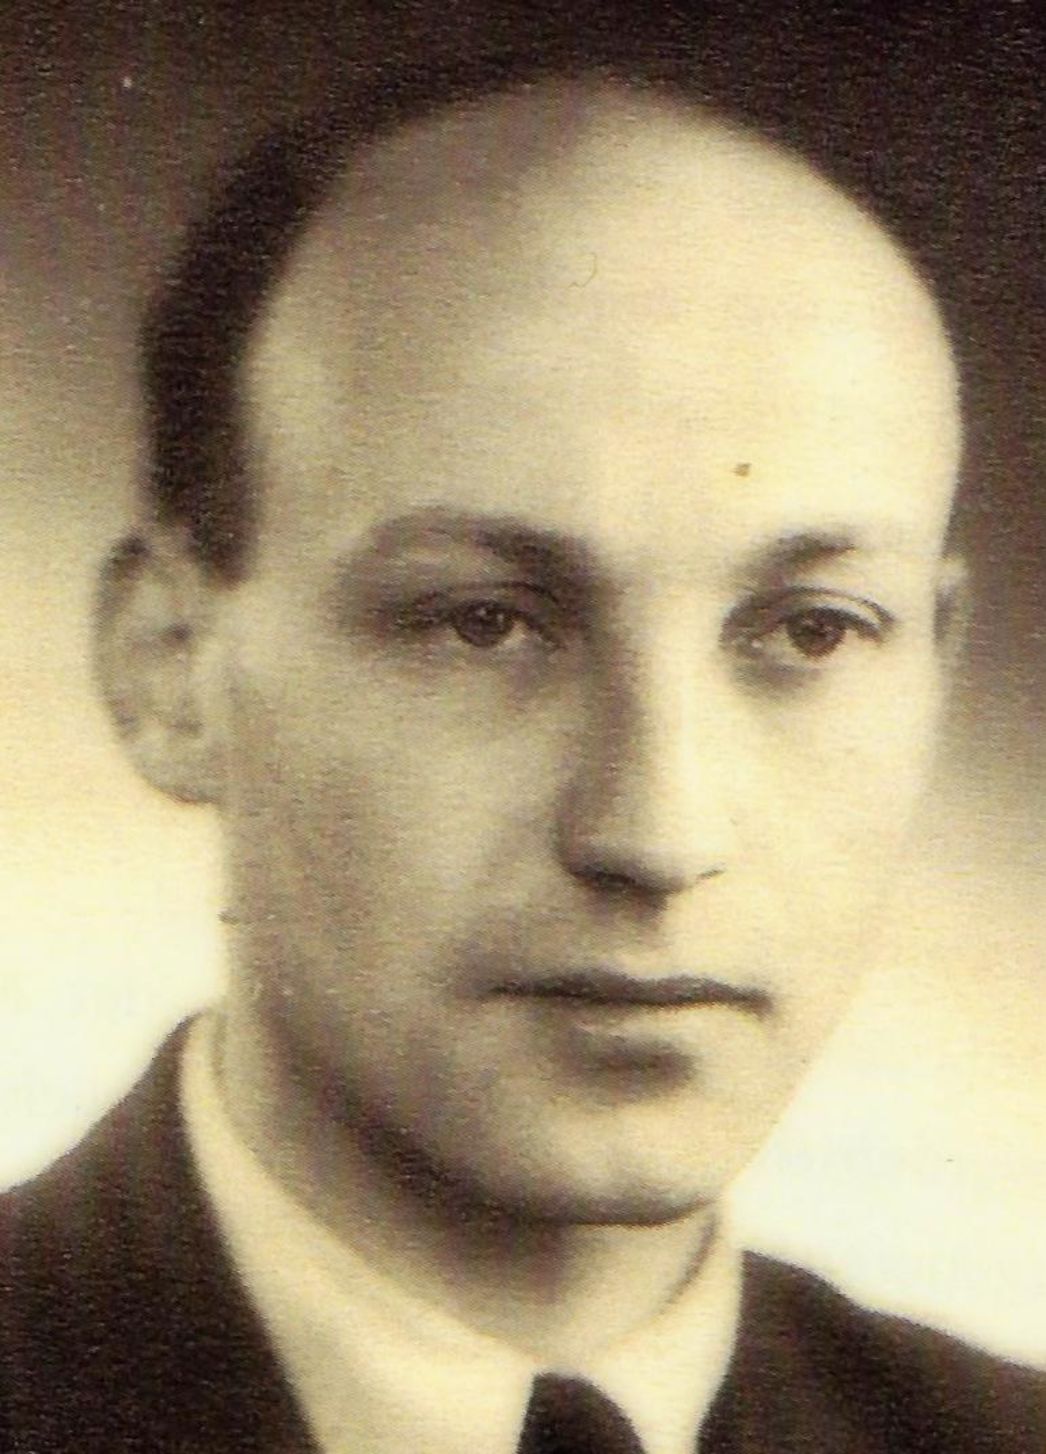 Passport photo of Max Windmüller